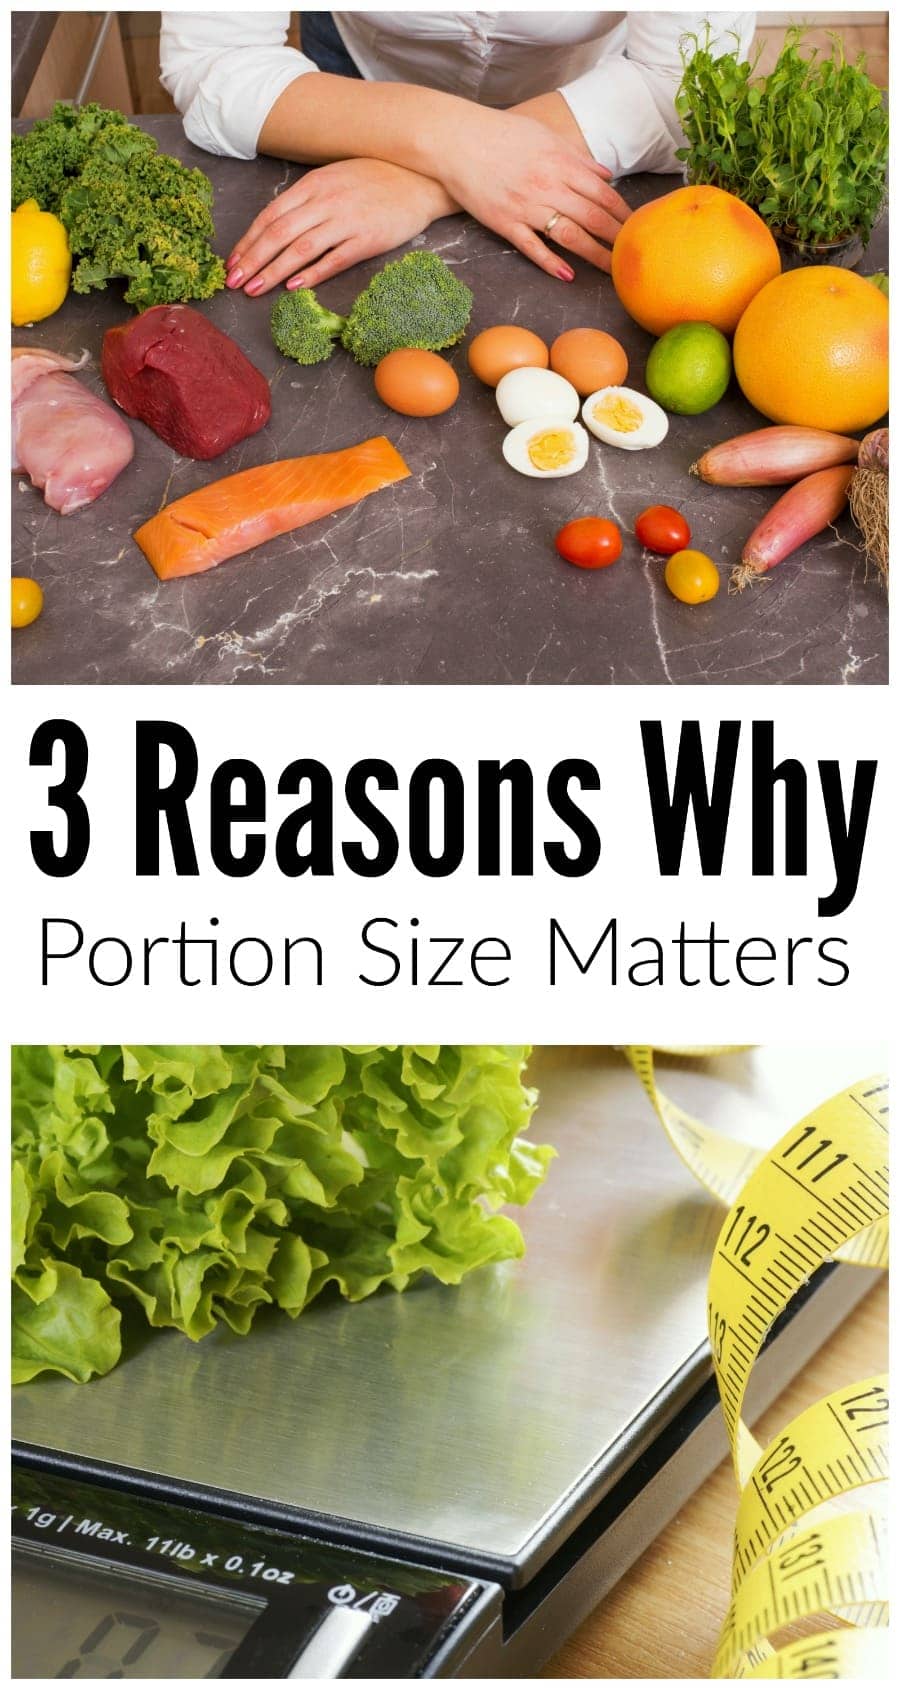 portion-size-matters-diet